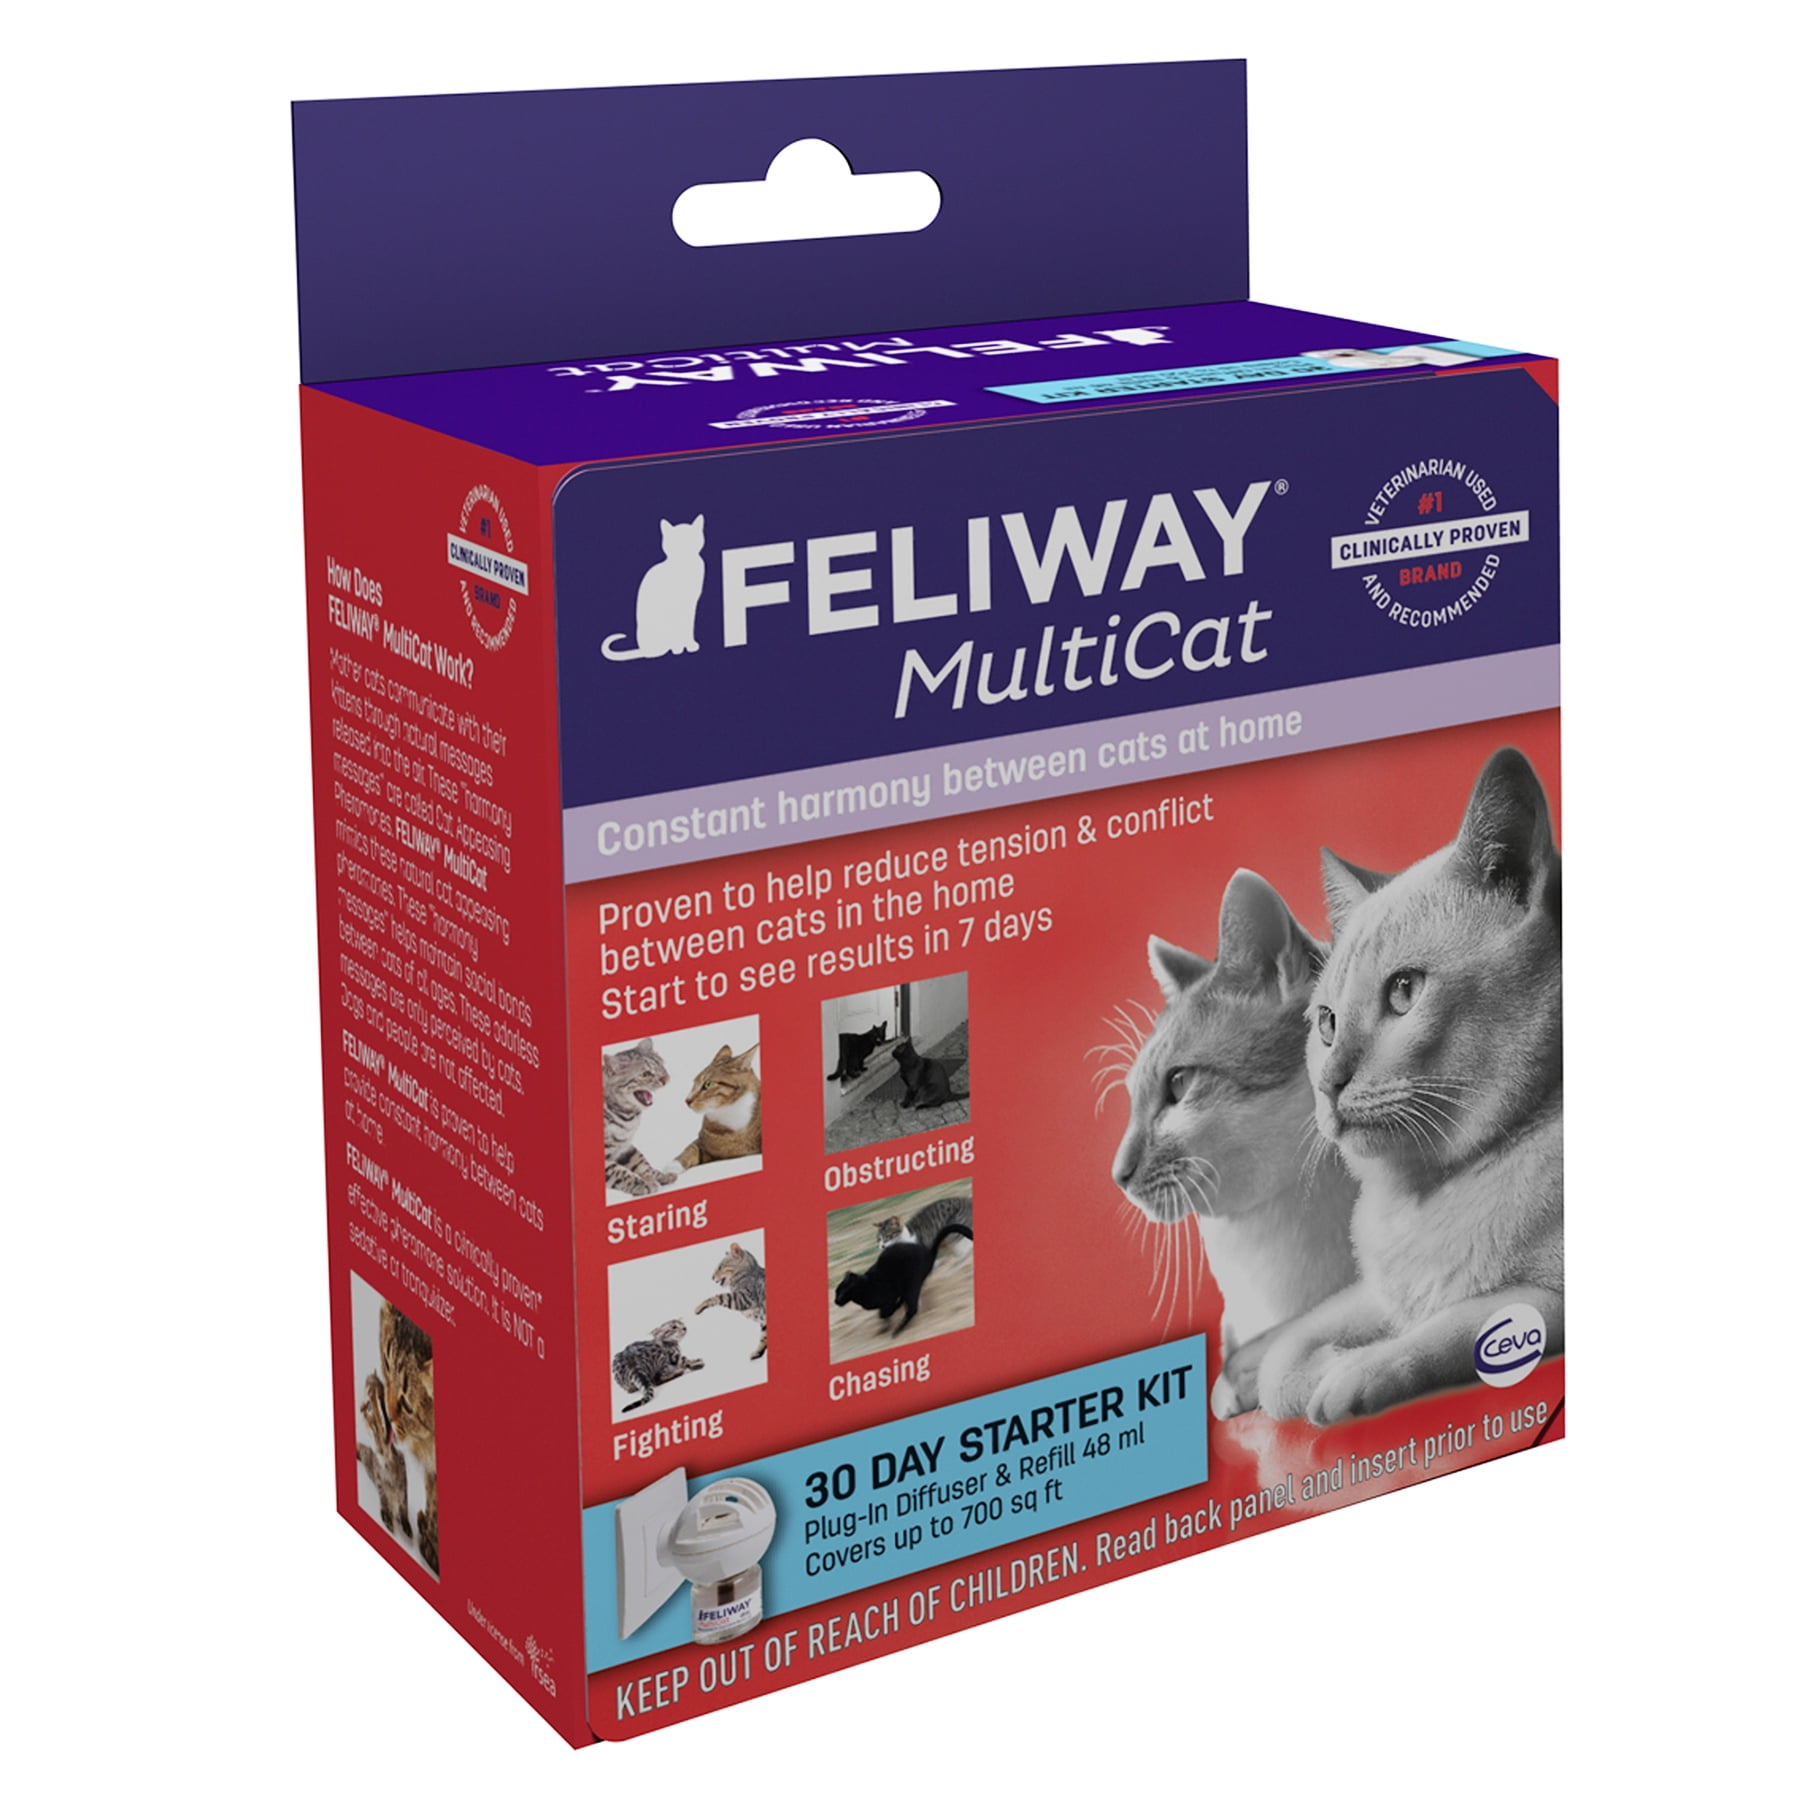 Feliway MultiCat 30 Day Starter Kit Plug-In Diffuser & Refill, 48